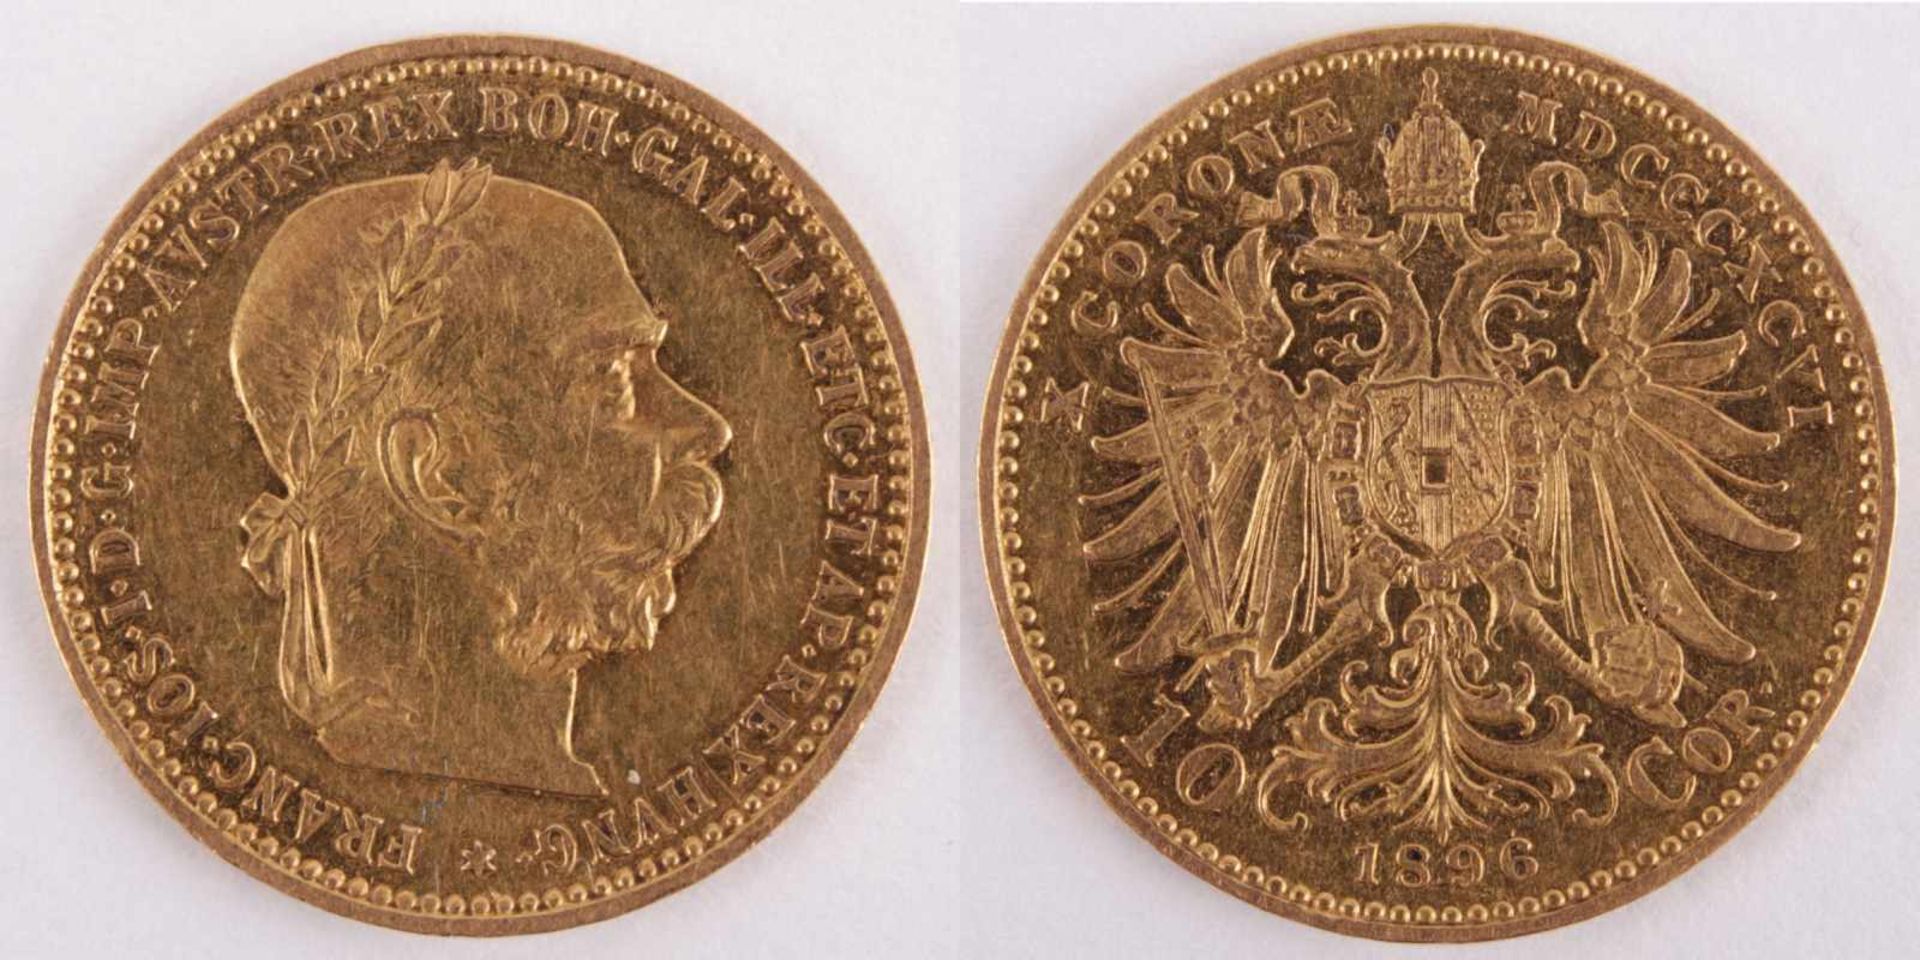 Gold coin: 10 Crown FJI 1896 Austria-Hungary, 10 Crown Franz Joseph I., year 1896, gold coin, 900/